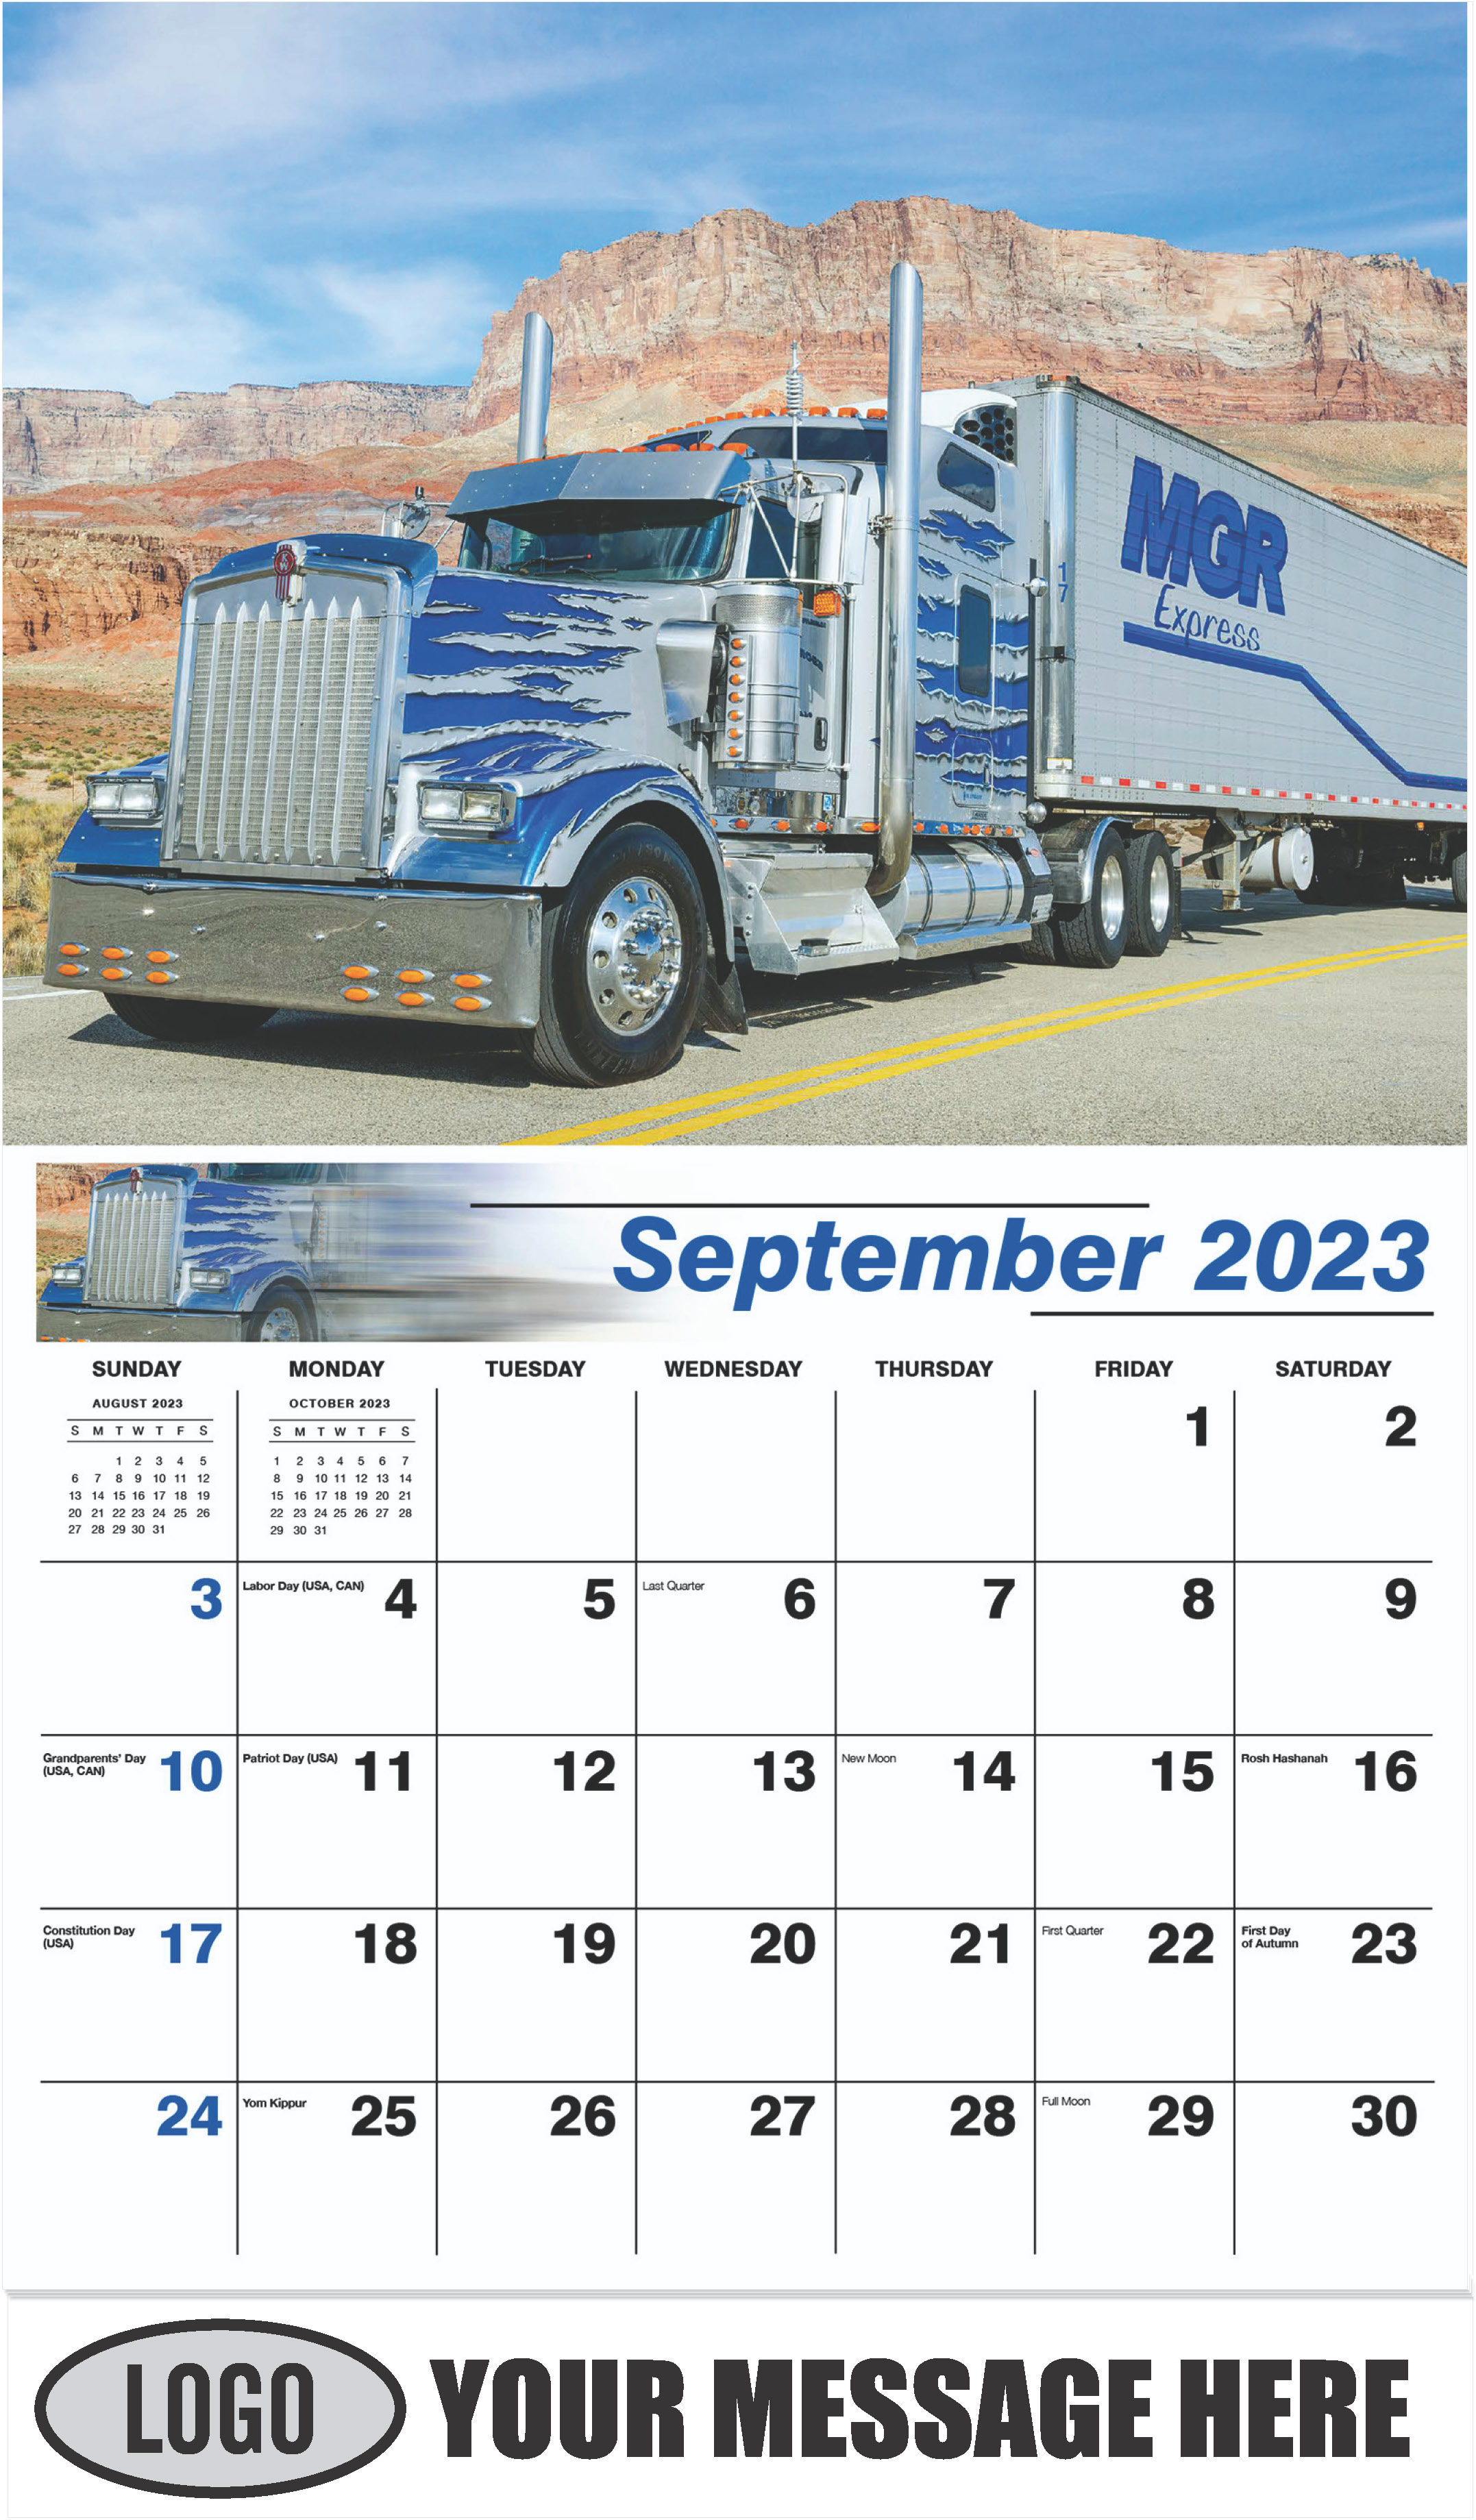 2006 Kenworth W900 - September - Kings of the Road 2023 Promotional Calendar